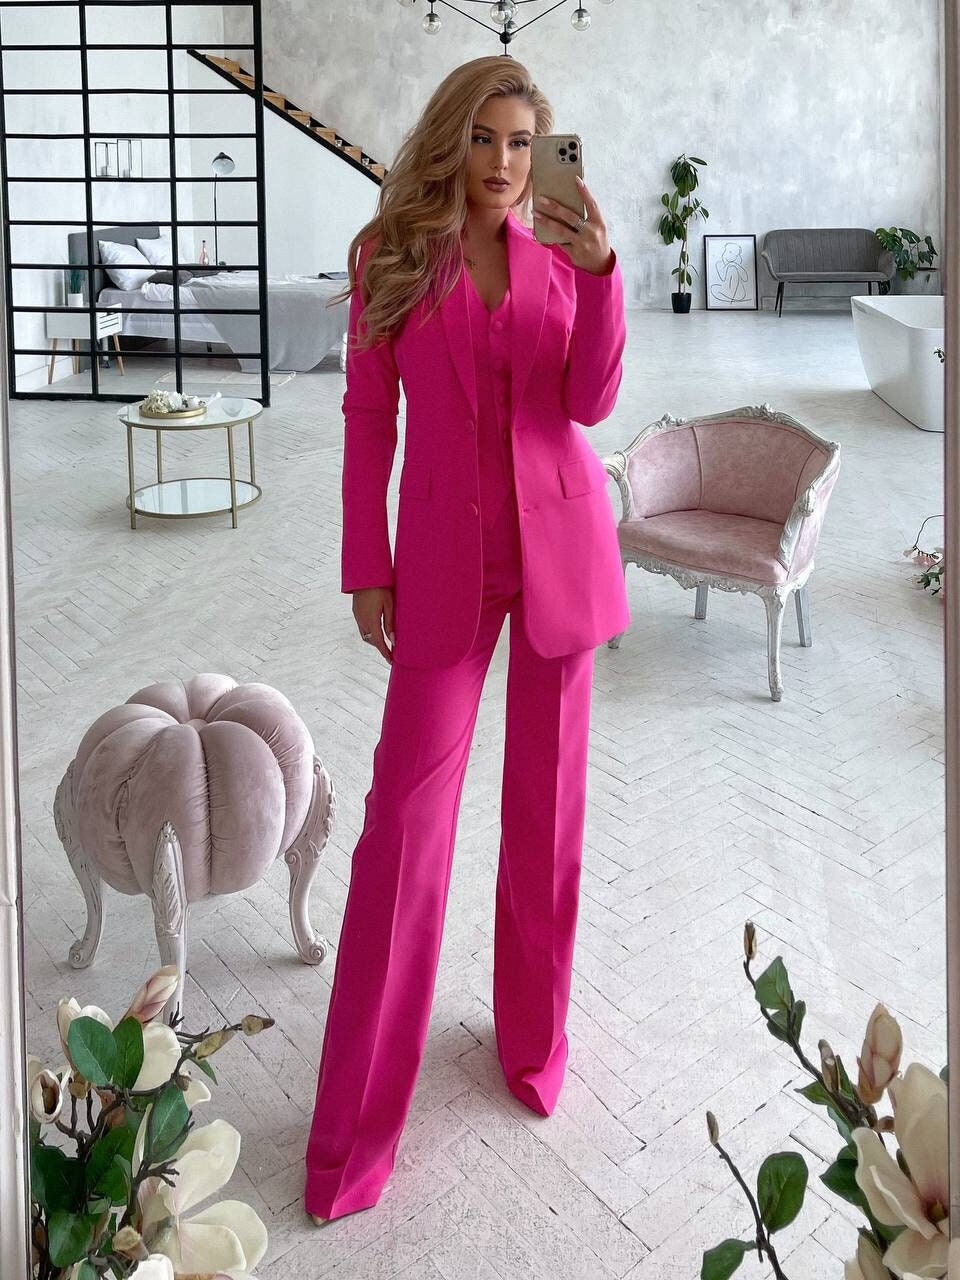 Stunning Pink Suit